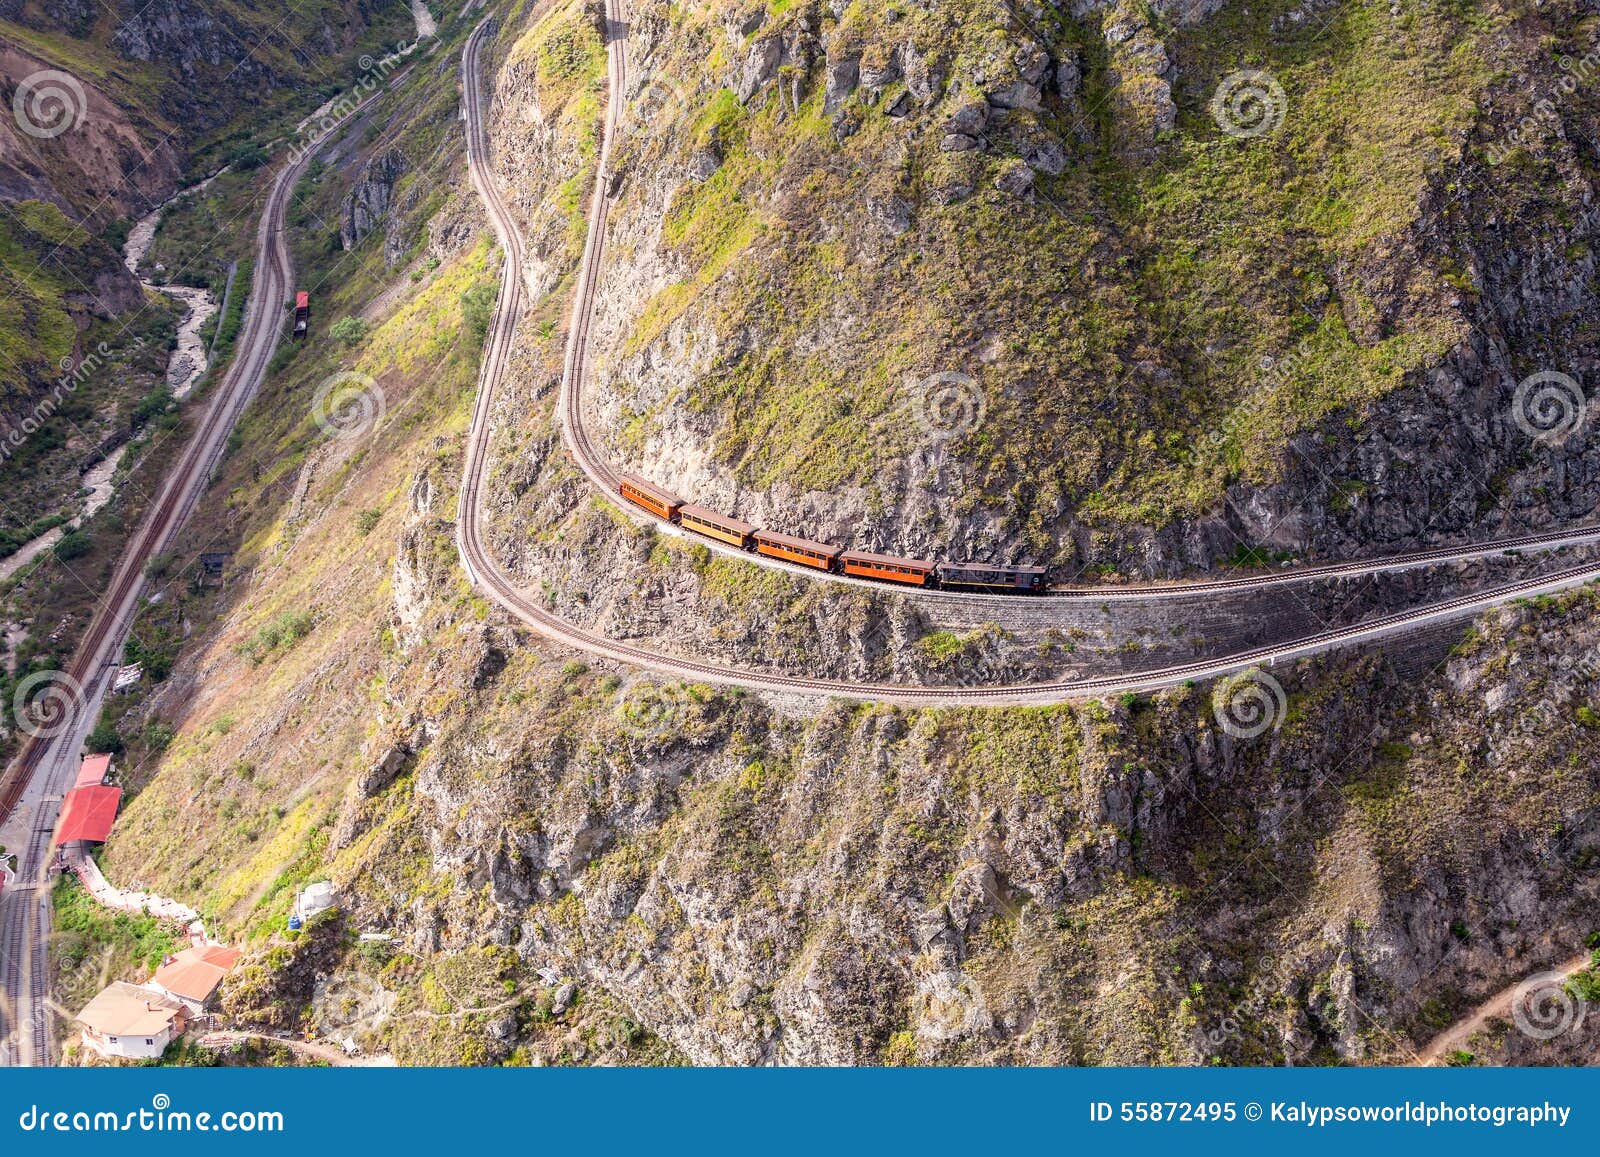 touristic train trip, route through the andes mountains